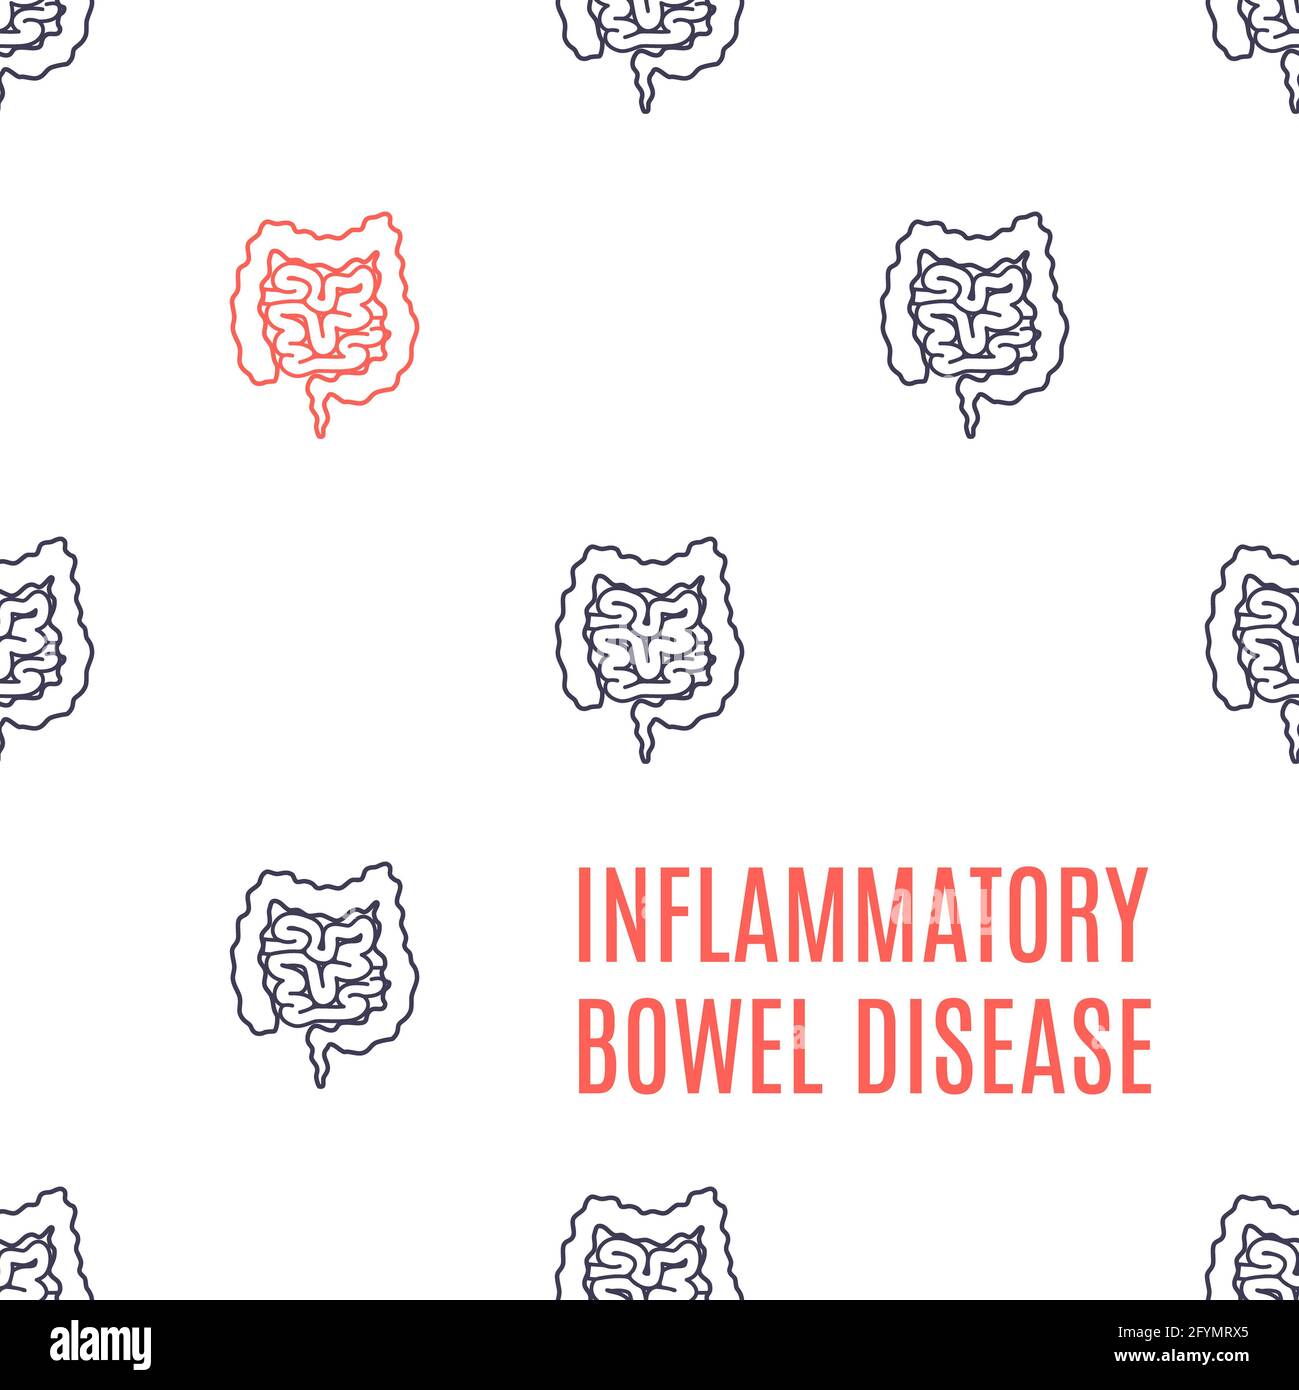 Inflammatory bowel disorder,  illustration Stock Photo